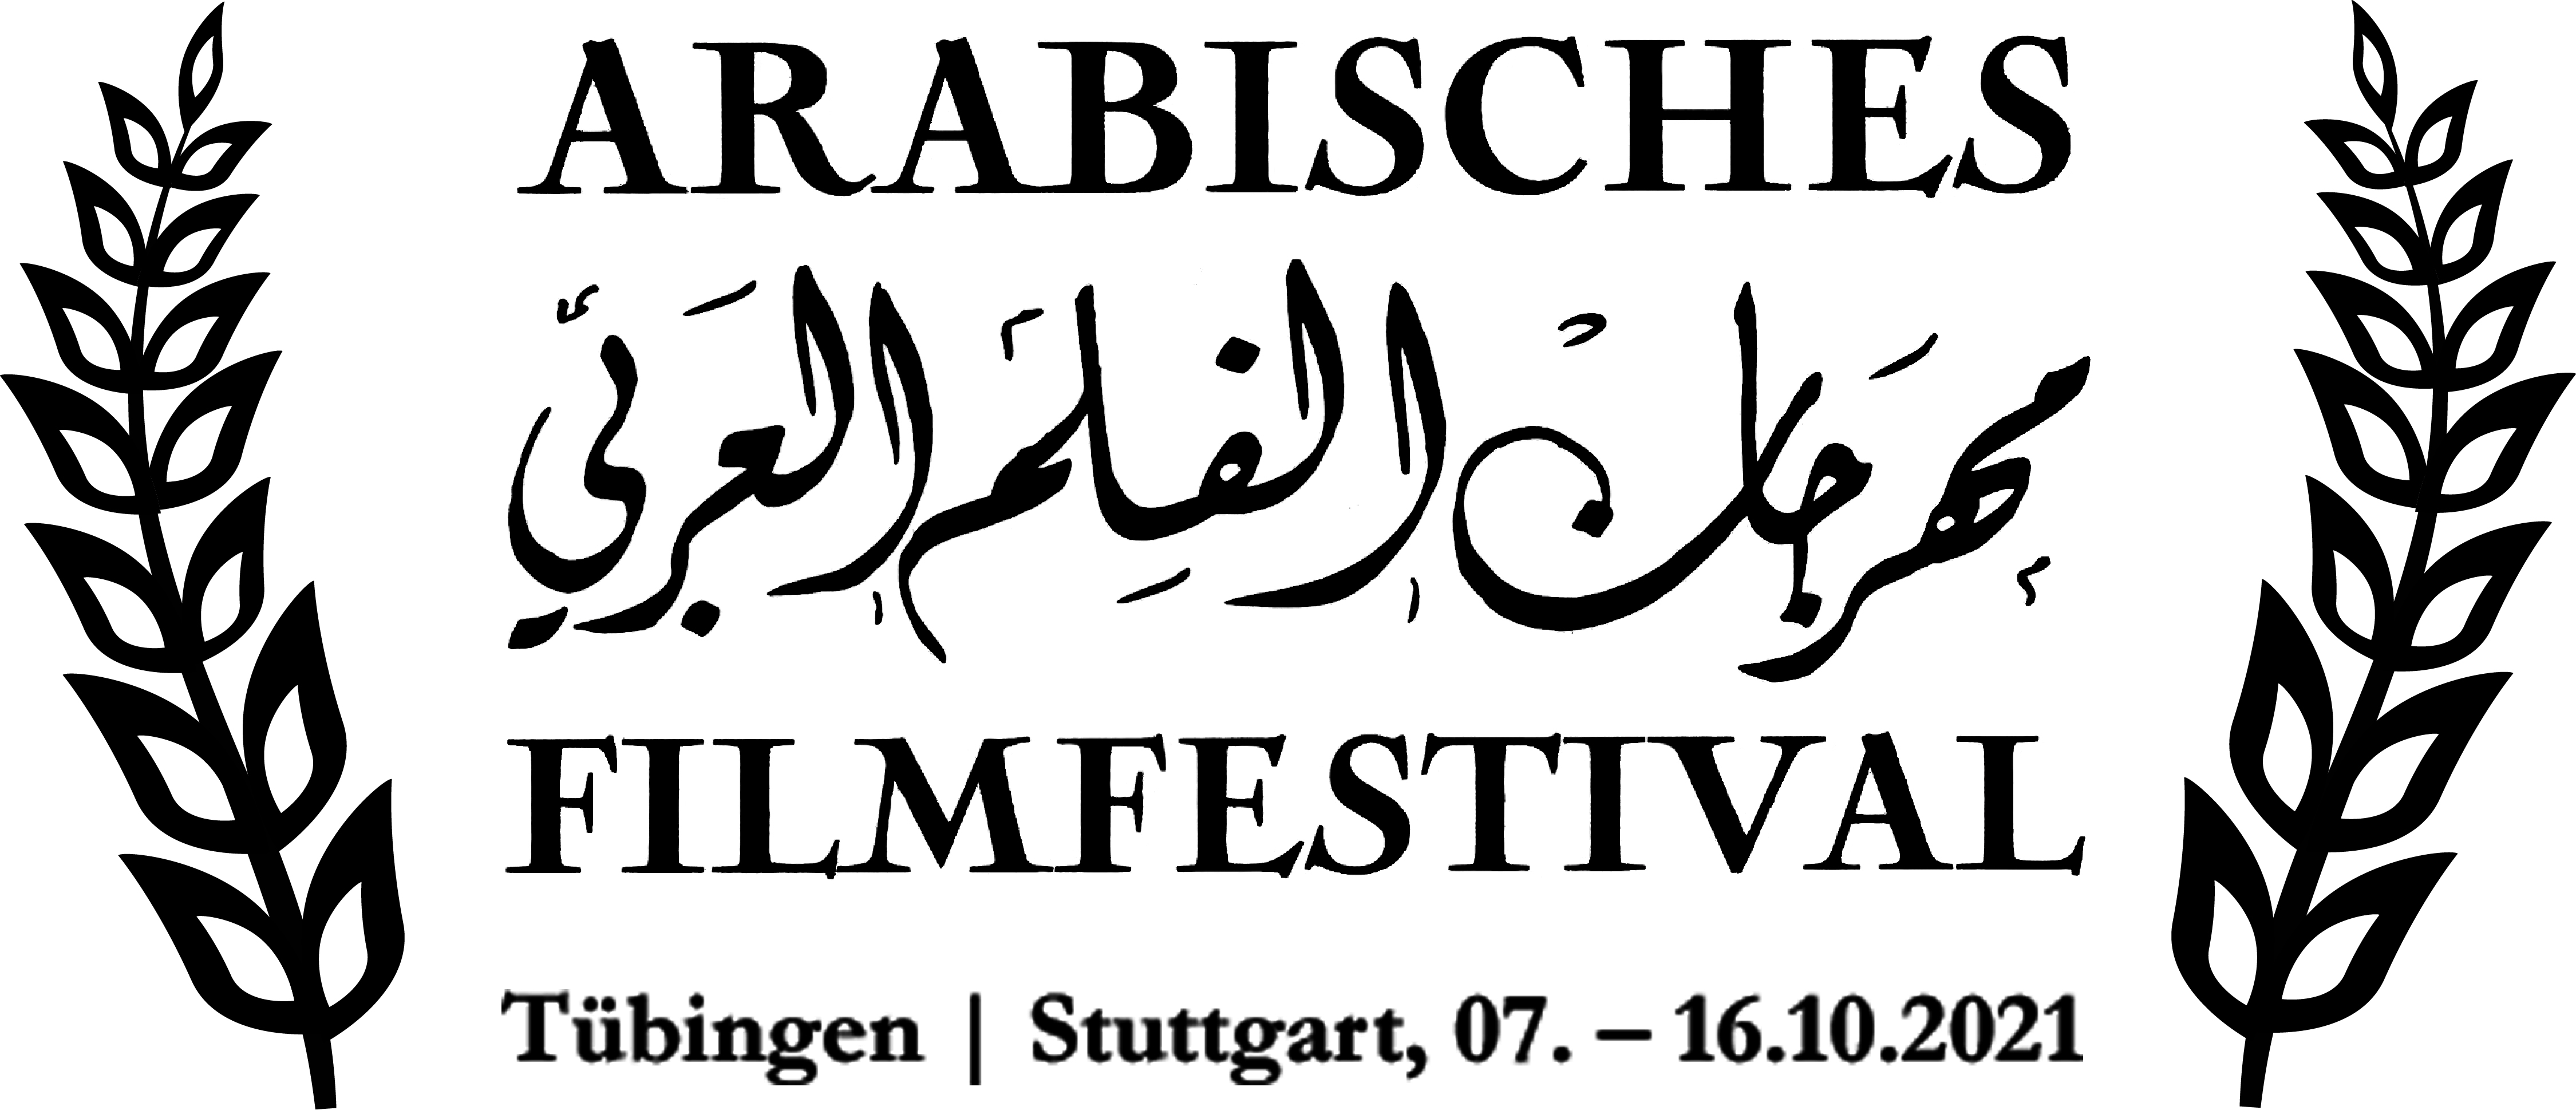 Arabisches Film Festival T�bingen